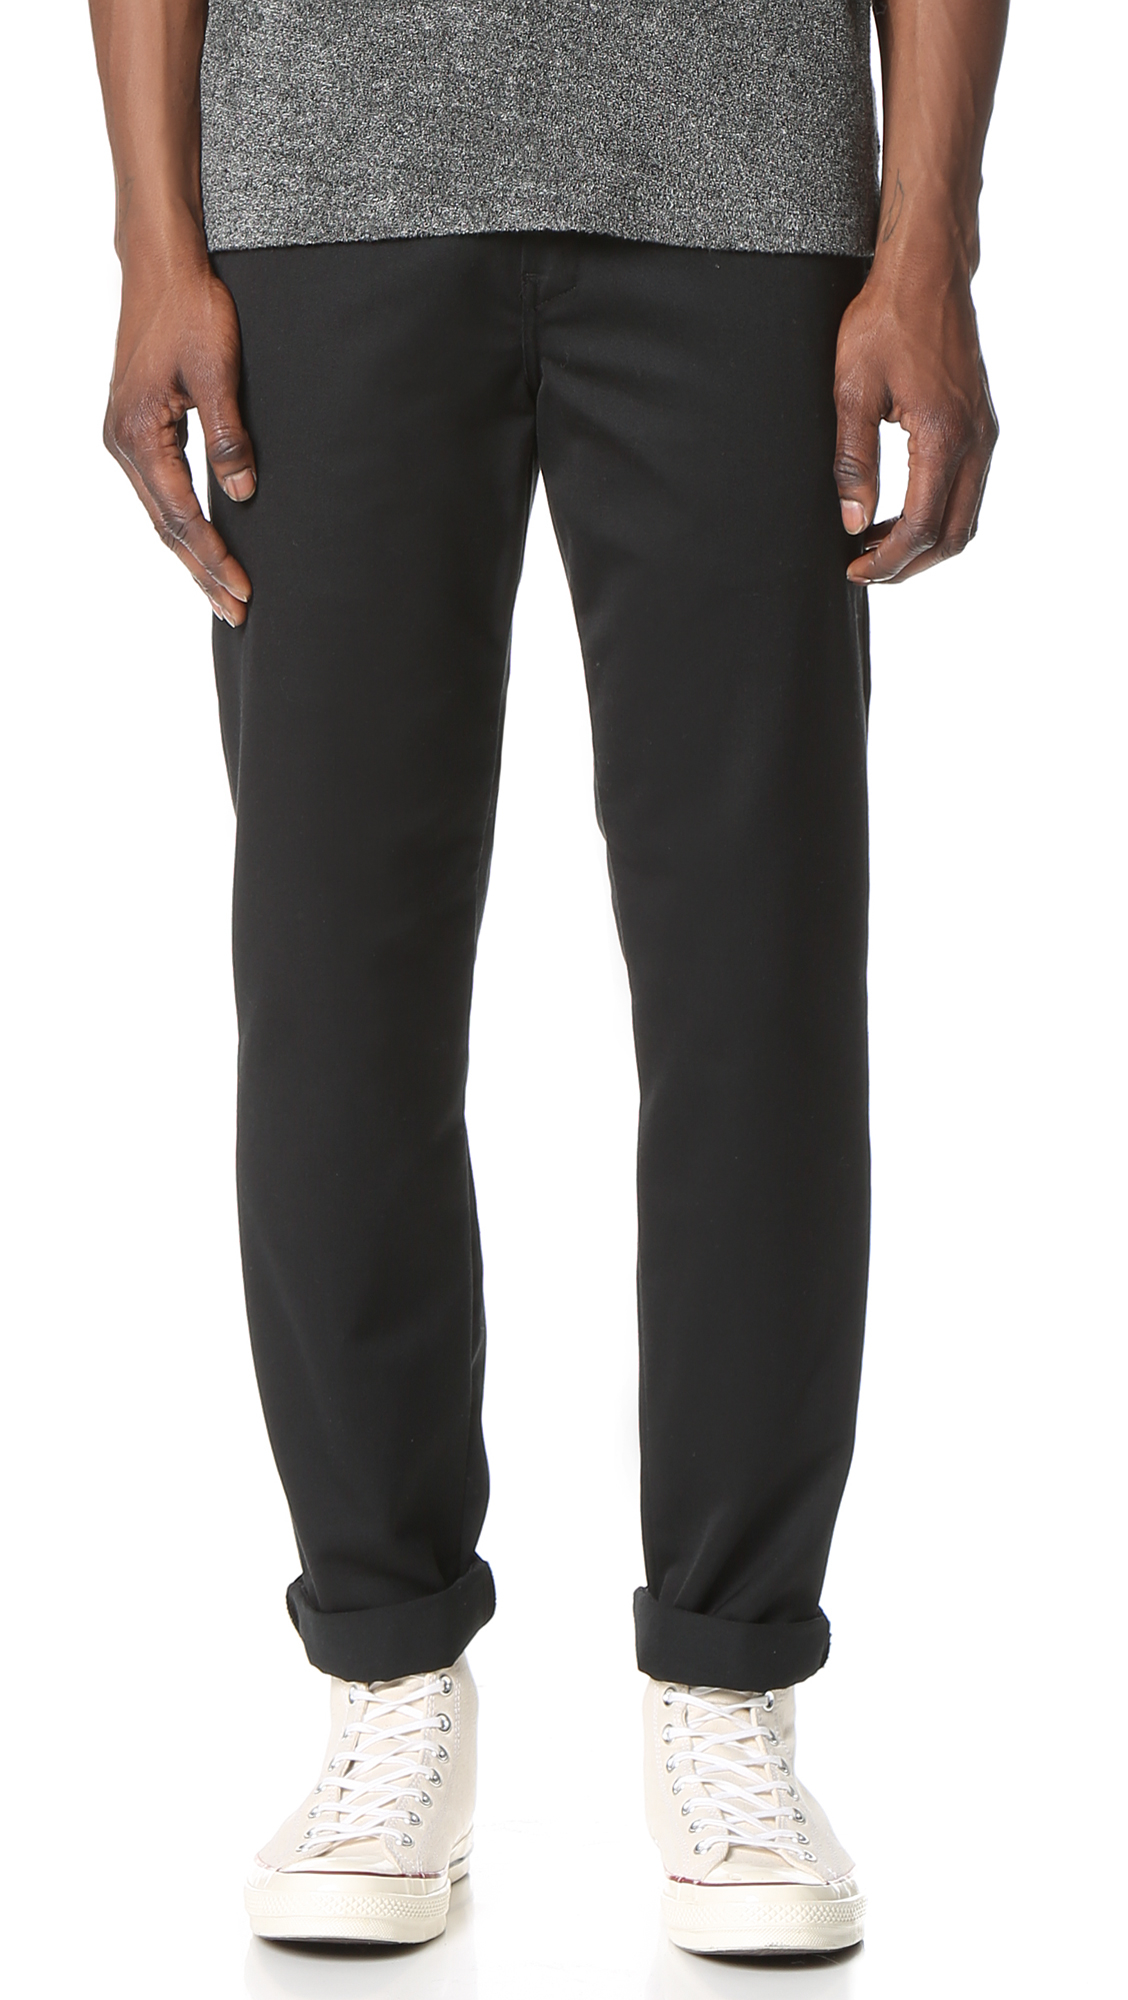 Carhartt WIP Synthetic Rinsed Master Pants Ii in Black for Men - Lyst